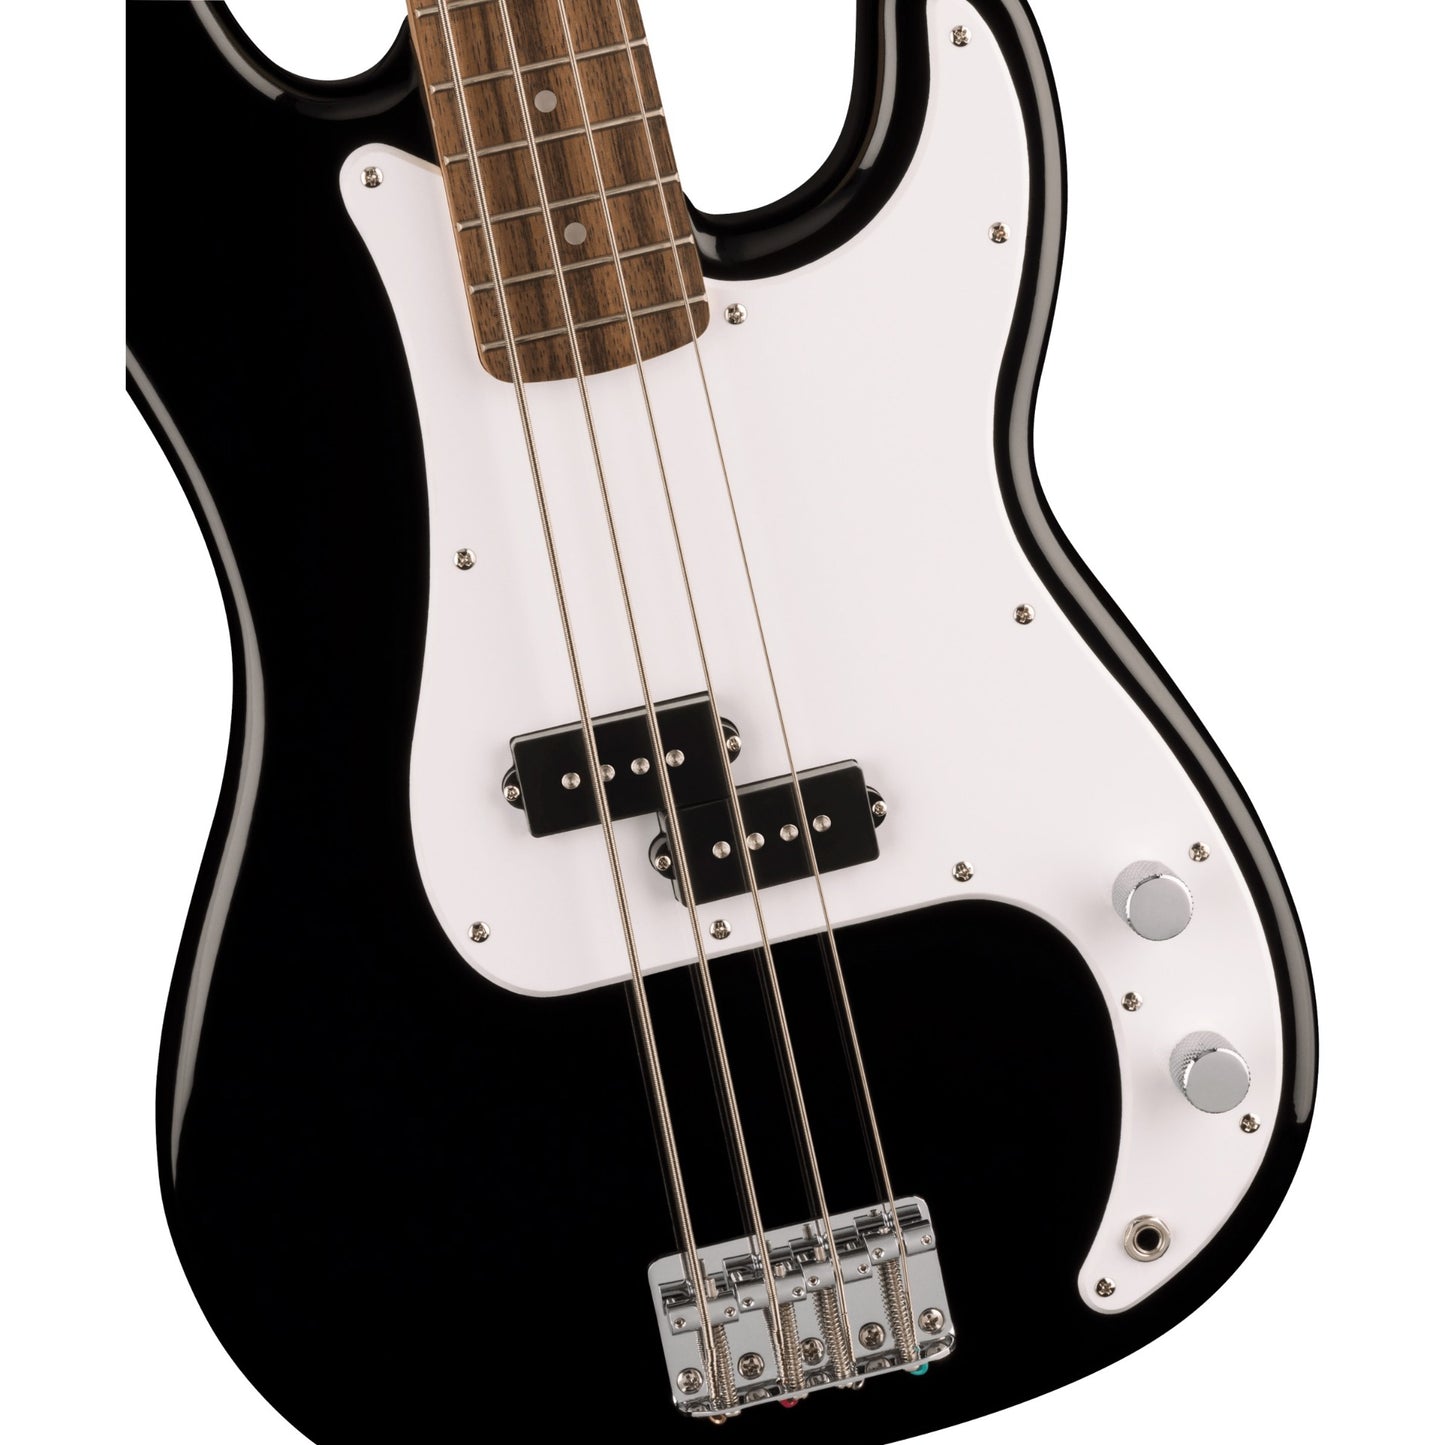 Squier Sonic Precision Bass Guitar - Black